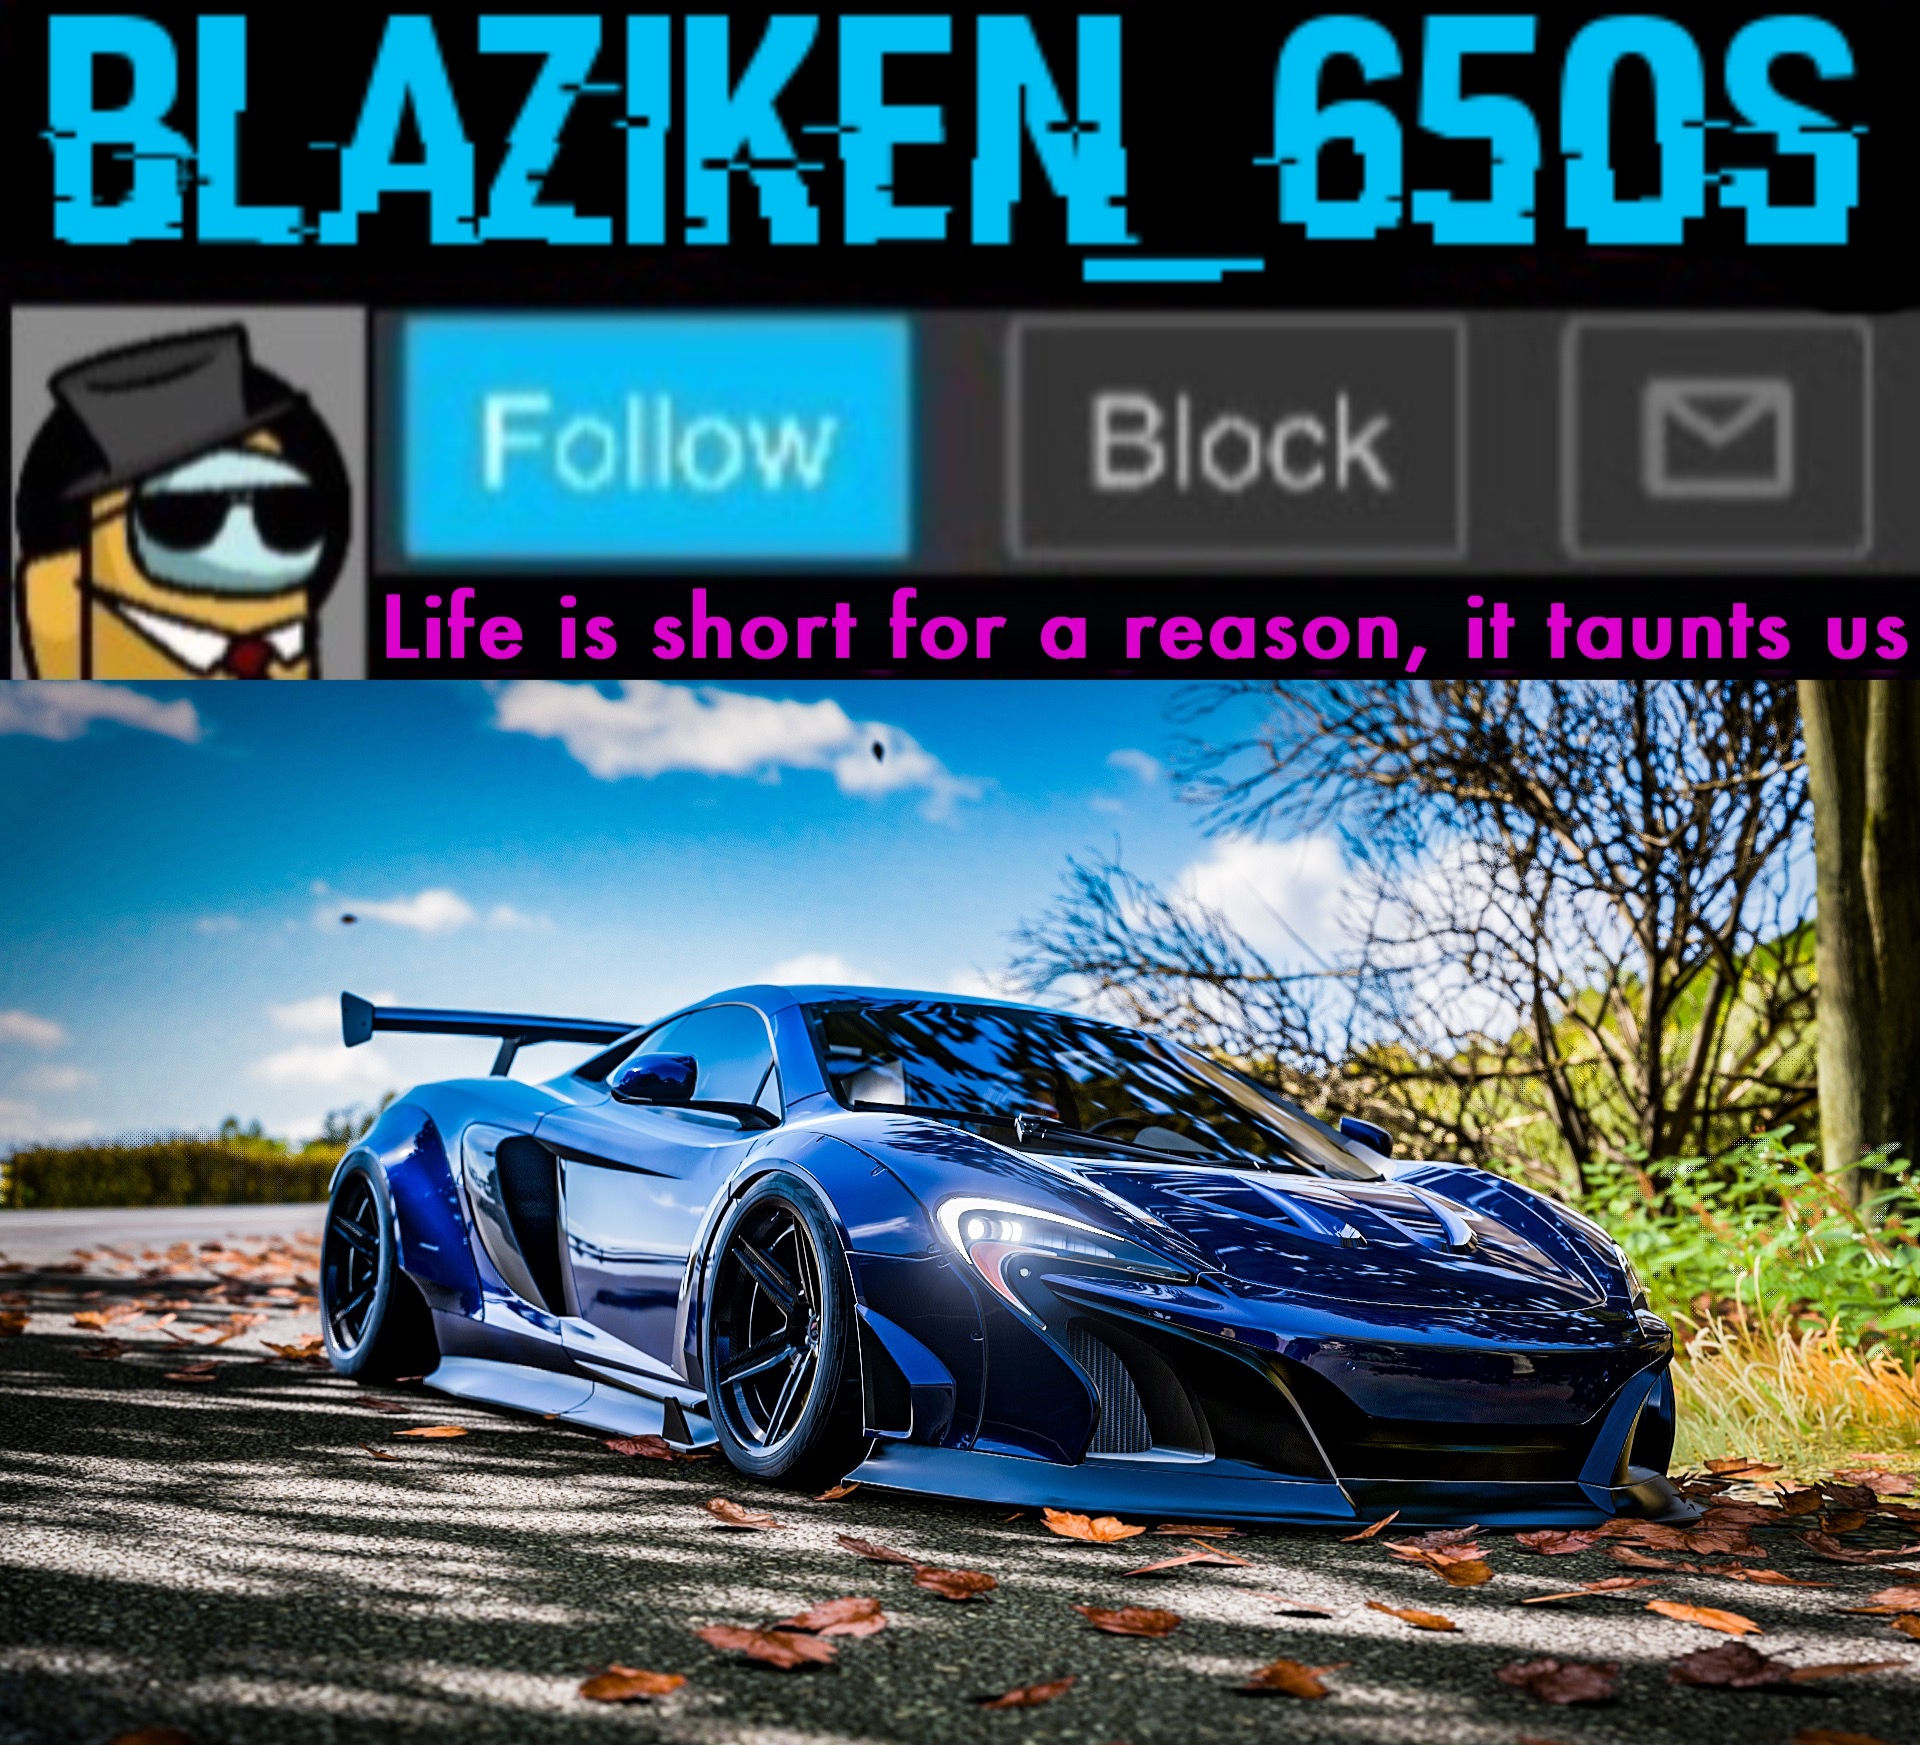 Blaziken_650s announcement template V7 (1080p) Blank Meme Template